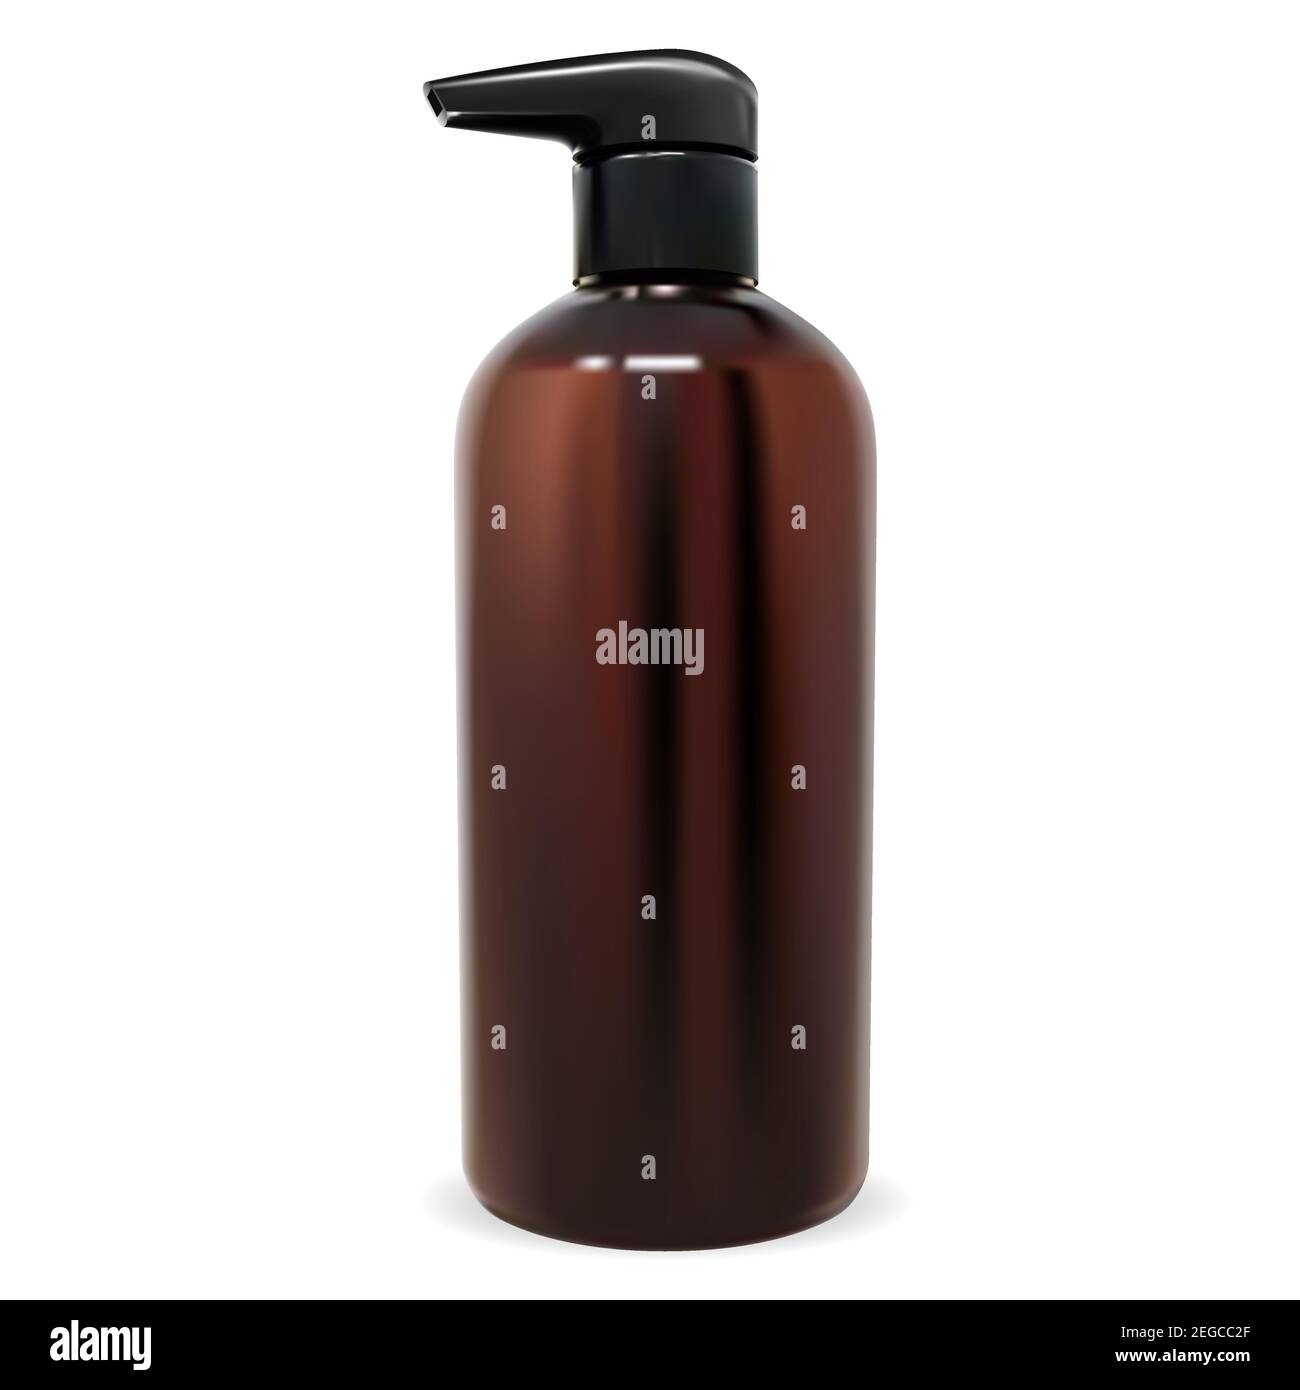 Ordinere Justerbar Præsident Pump bottle mockup. Brown dispenser package for shampoo or soap. Amber  plastic tube realistic 3d template for skin or body gel or medical  treatment. S Stock Vector Image & Art - Alamy